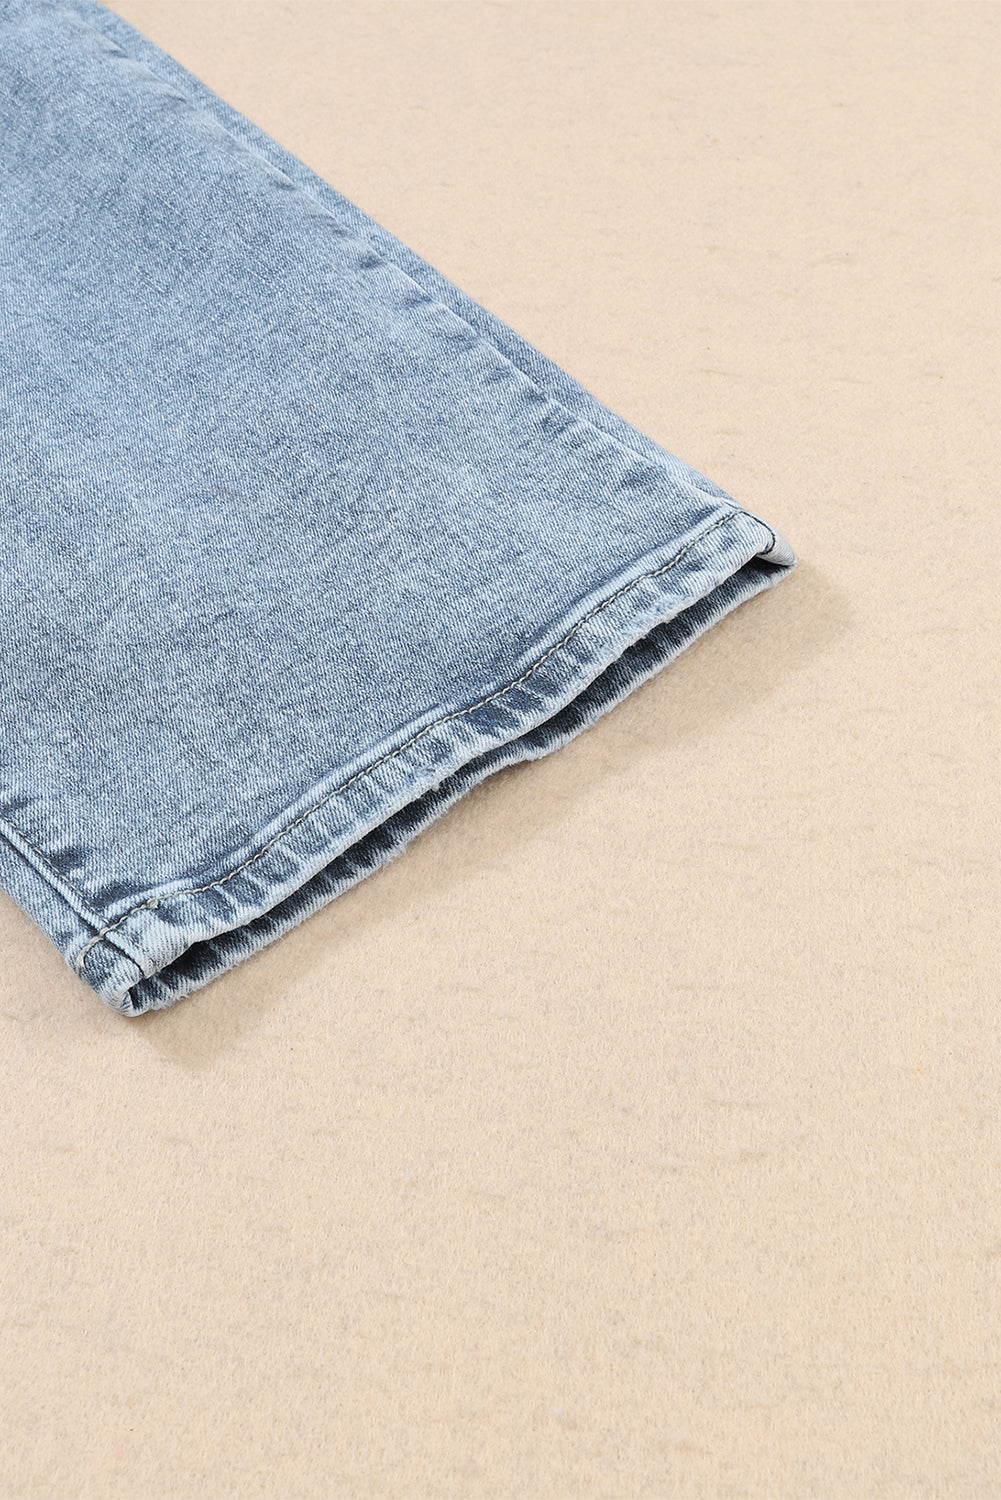 Navy Blue Light Wash Frayed Slim Fit High Waist Womens Jeans - US2EInc Apparel Plug Ltd. Co